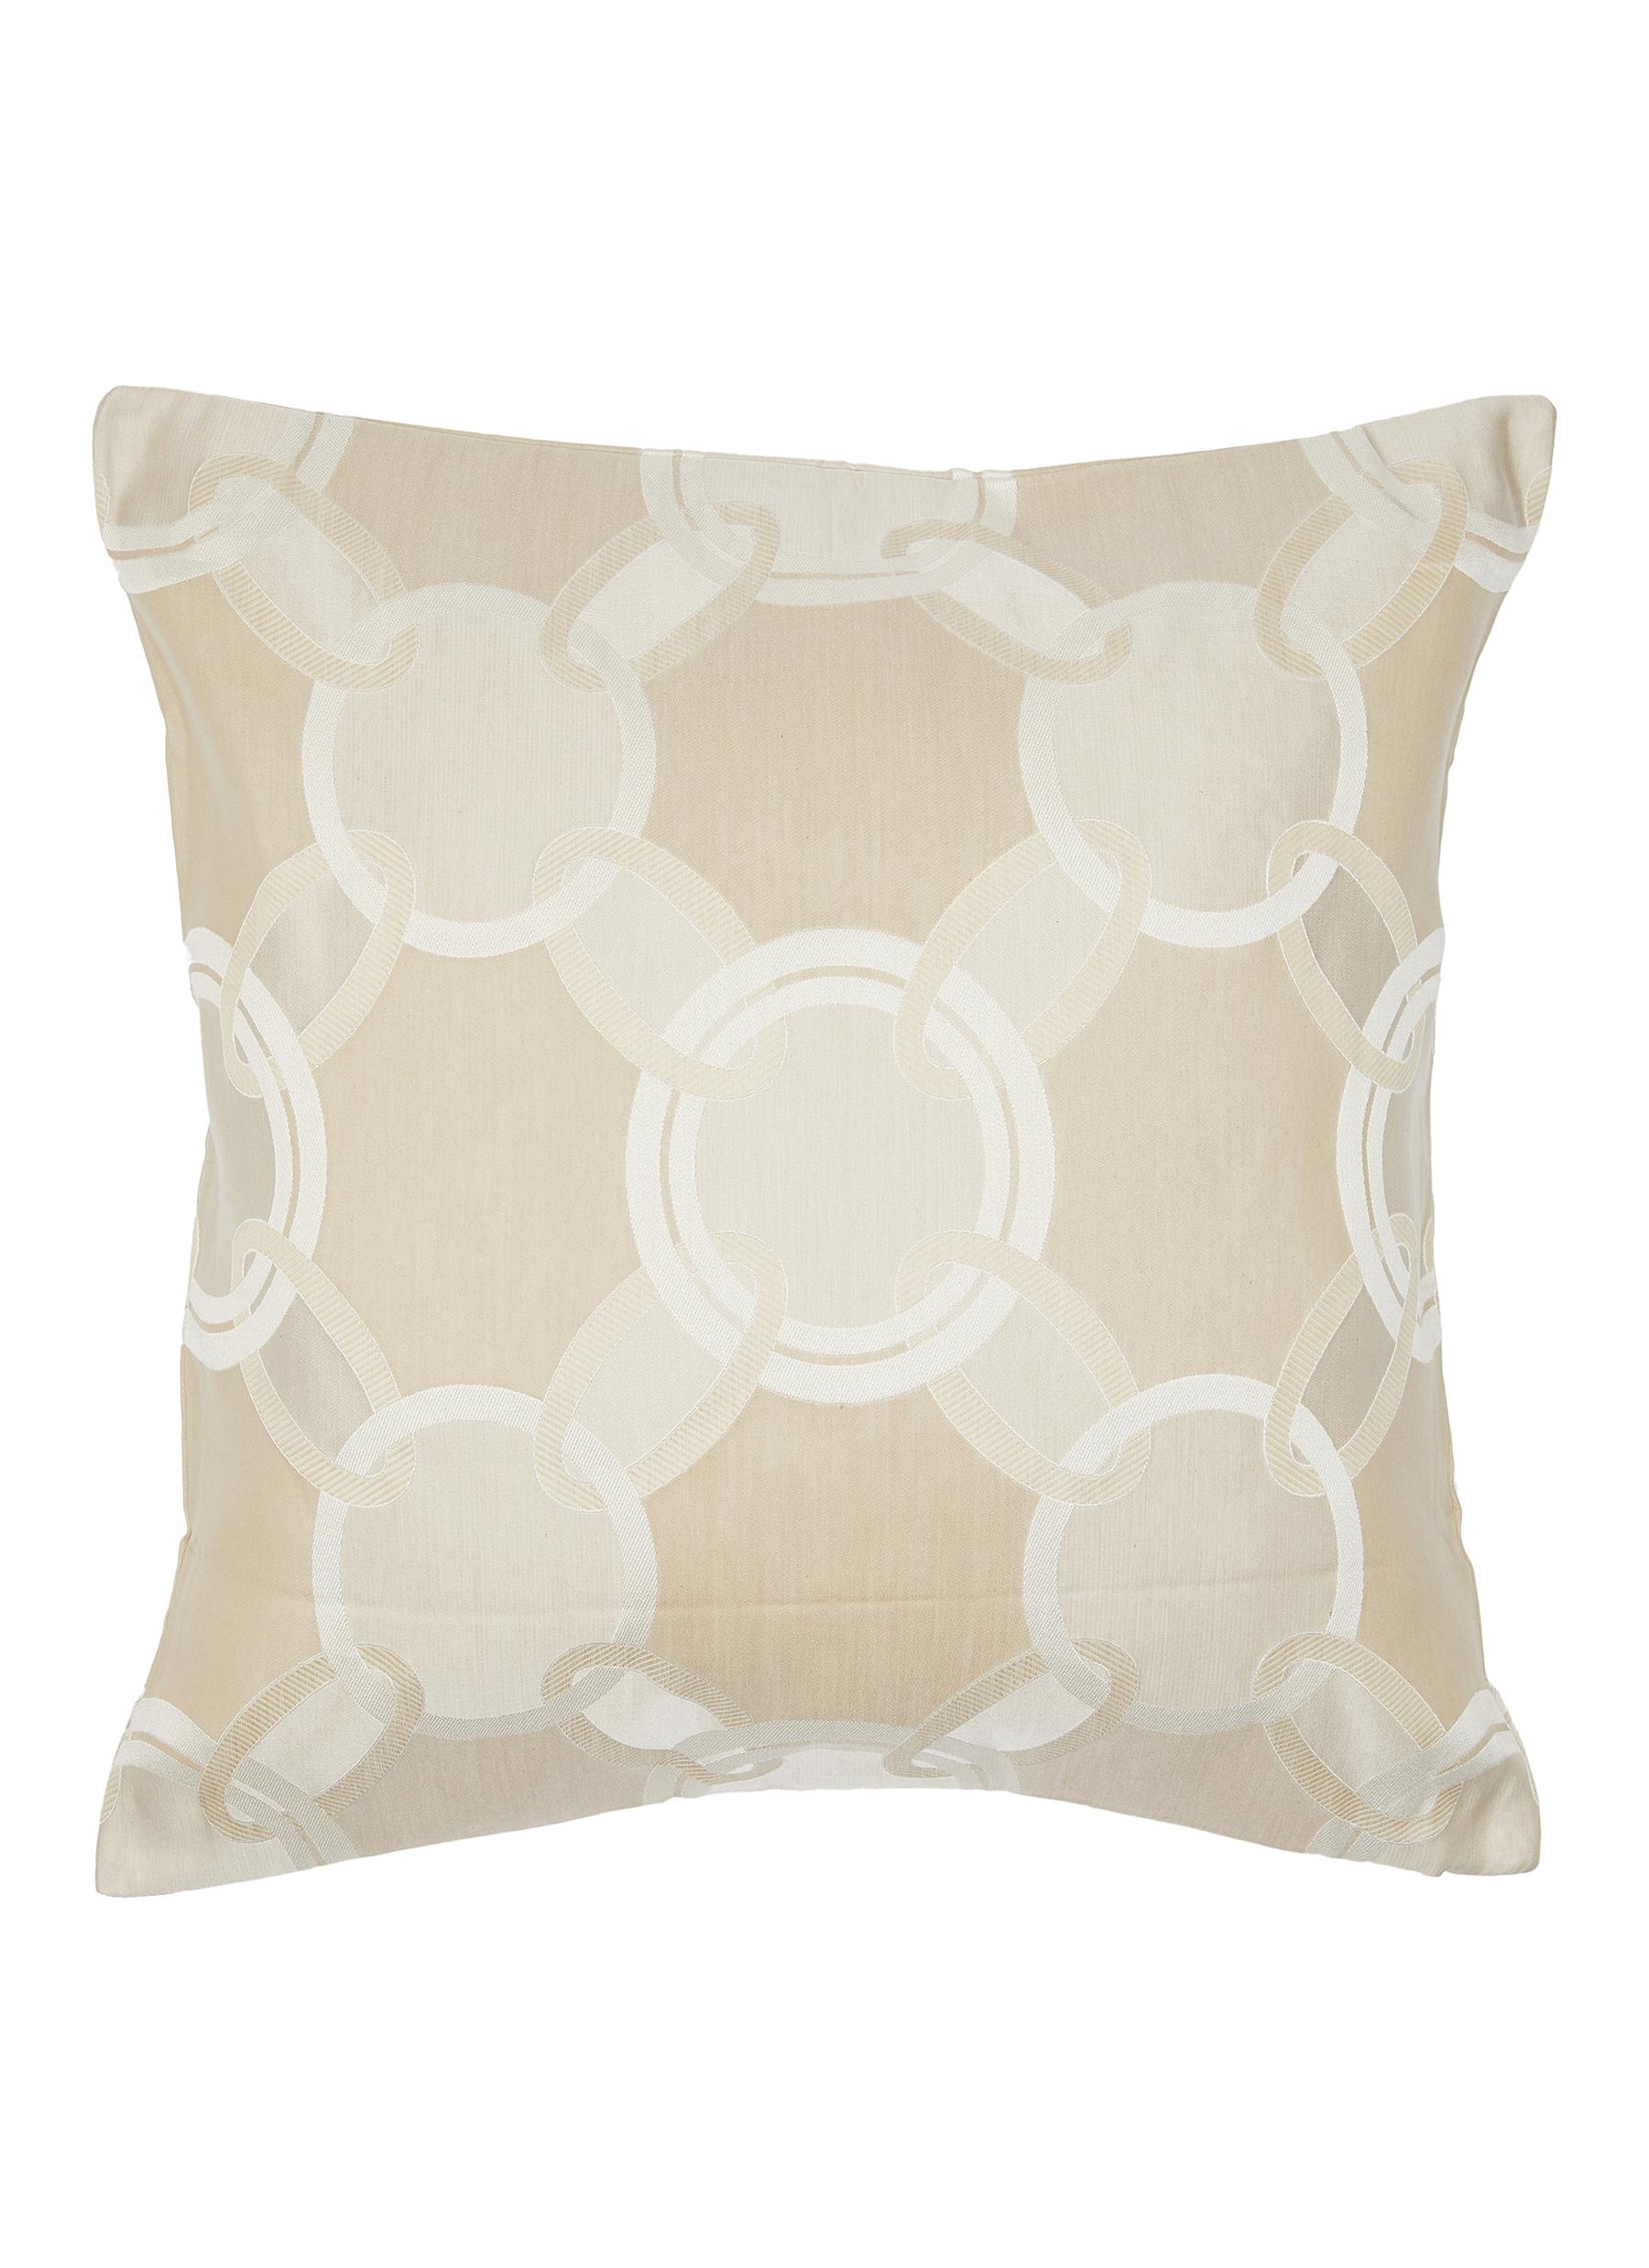 Luxury Chains Decorative Pillow Case - Beige/Ivory